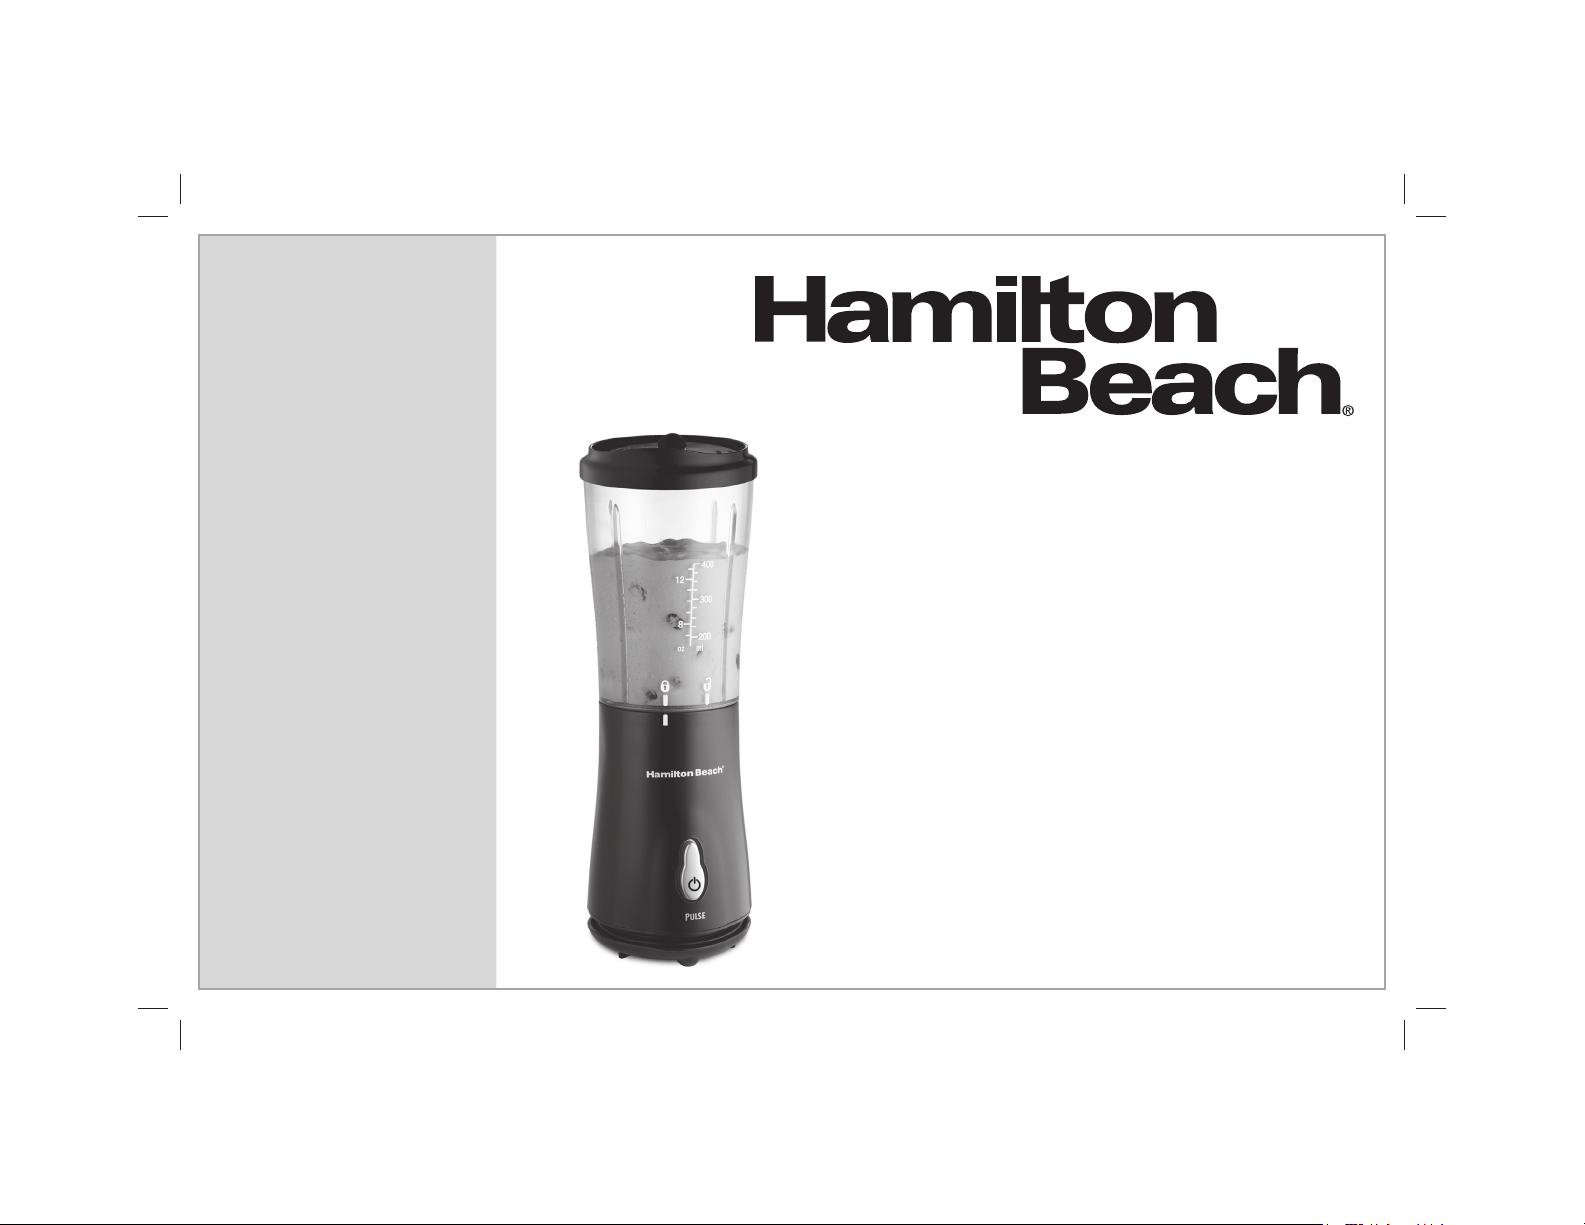 Hamilton Beach 51132 Single-Serve Blender with Travel Lid, Blue